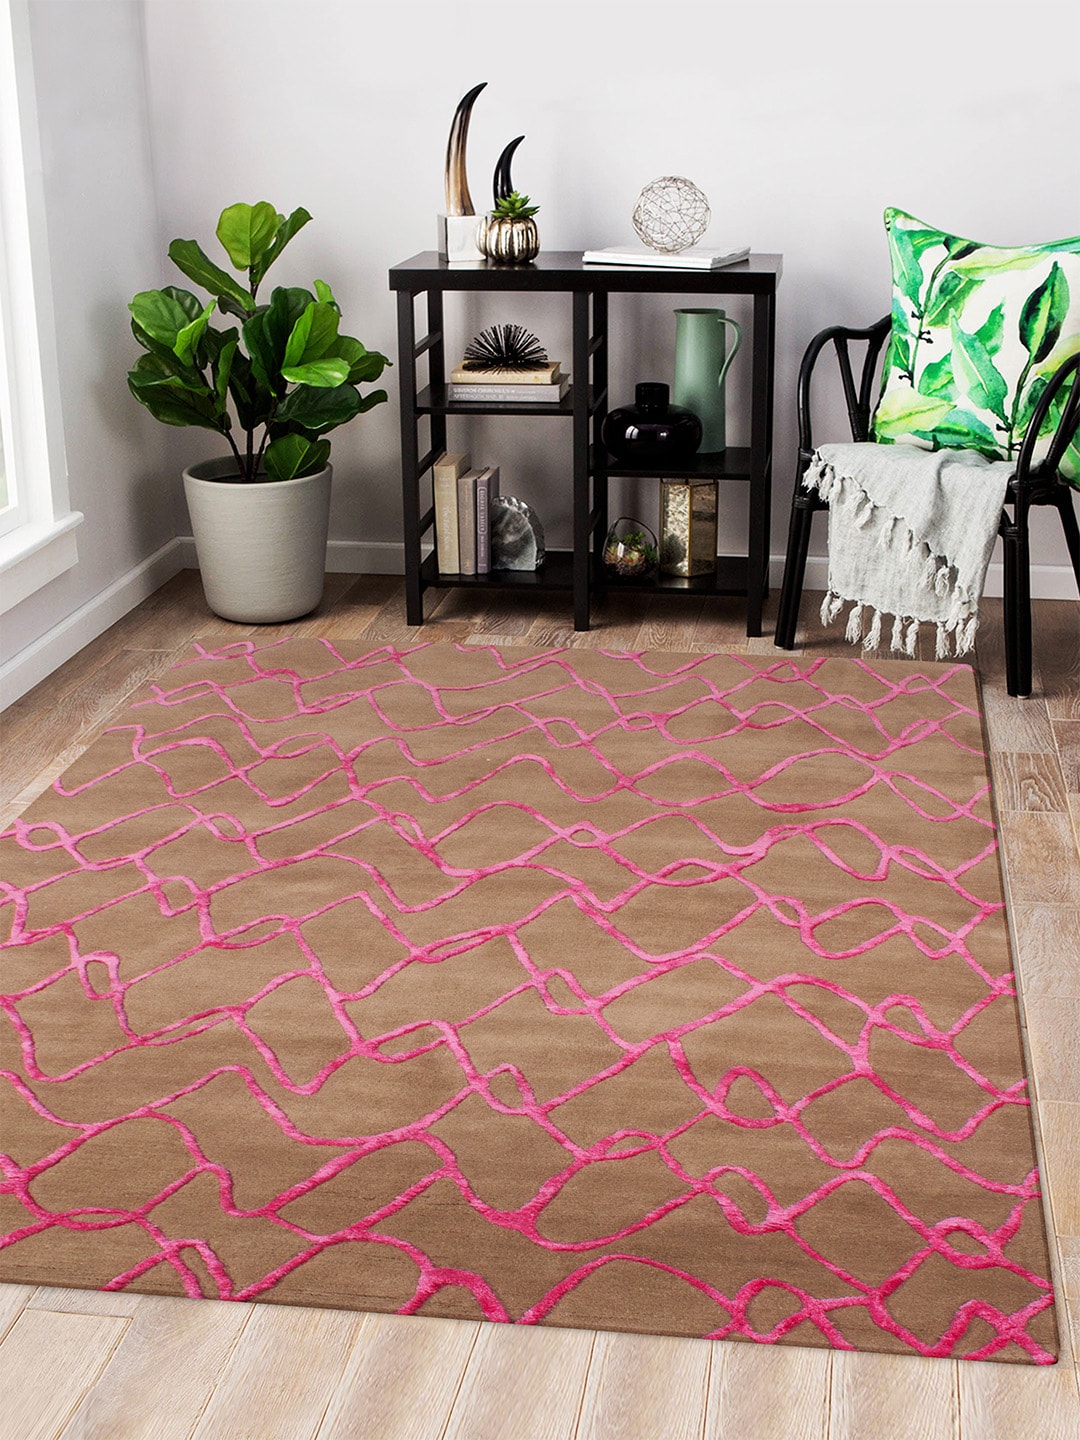 Story@home Beige & Pink Woollen Carpet Price in India